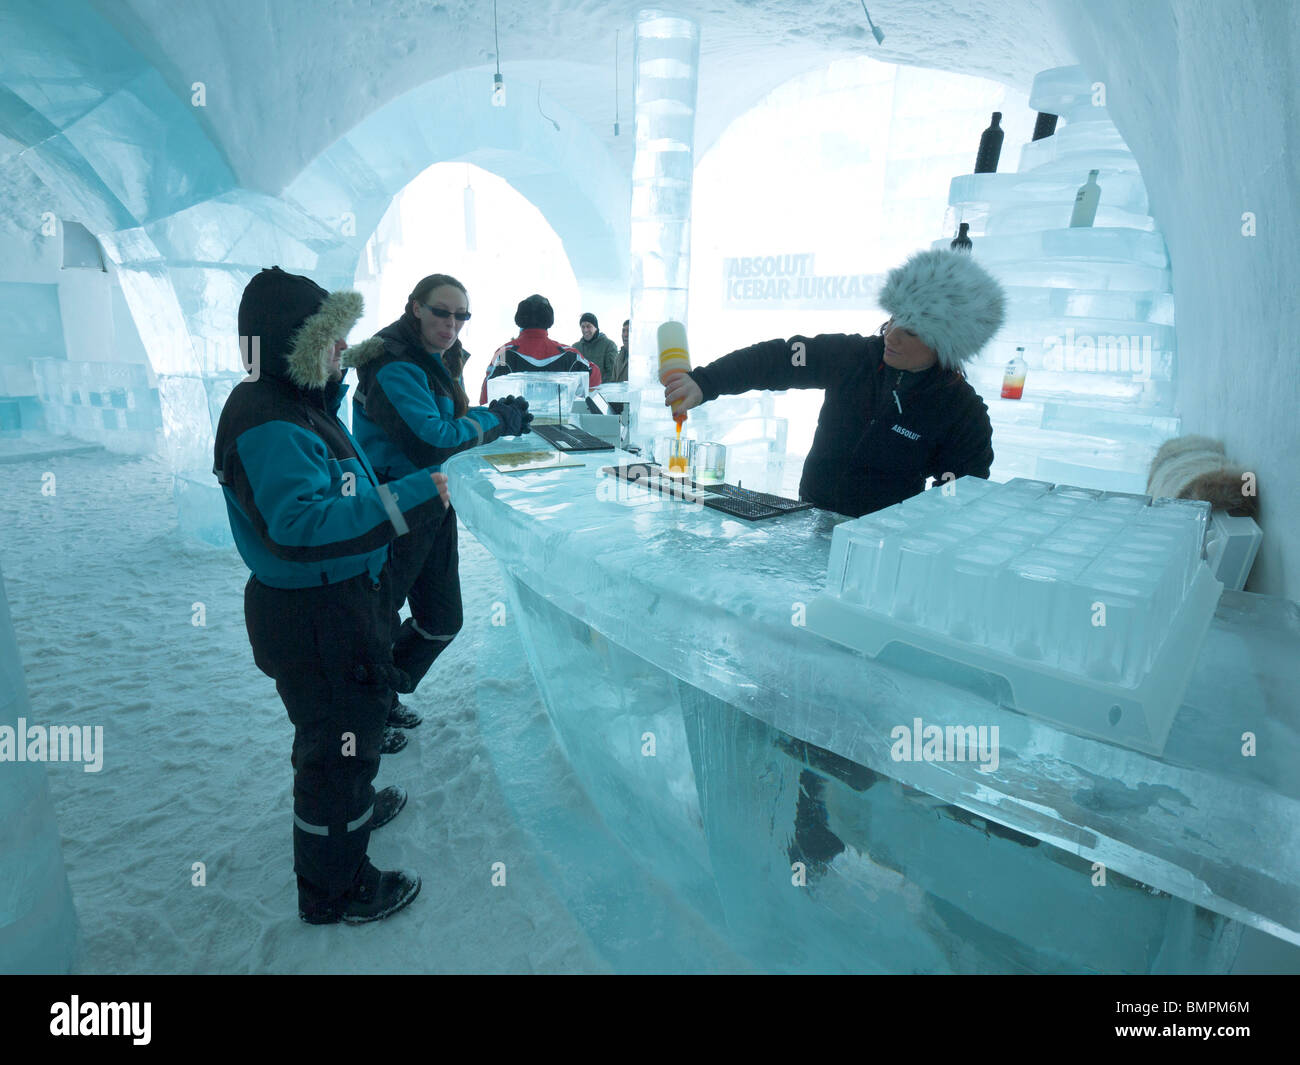 Tourists stand in the Absolut Icebar in the Jukkasjärvi icehotel. Stock Photo